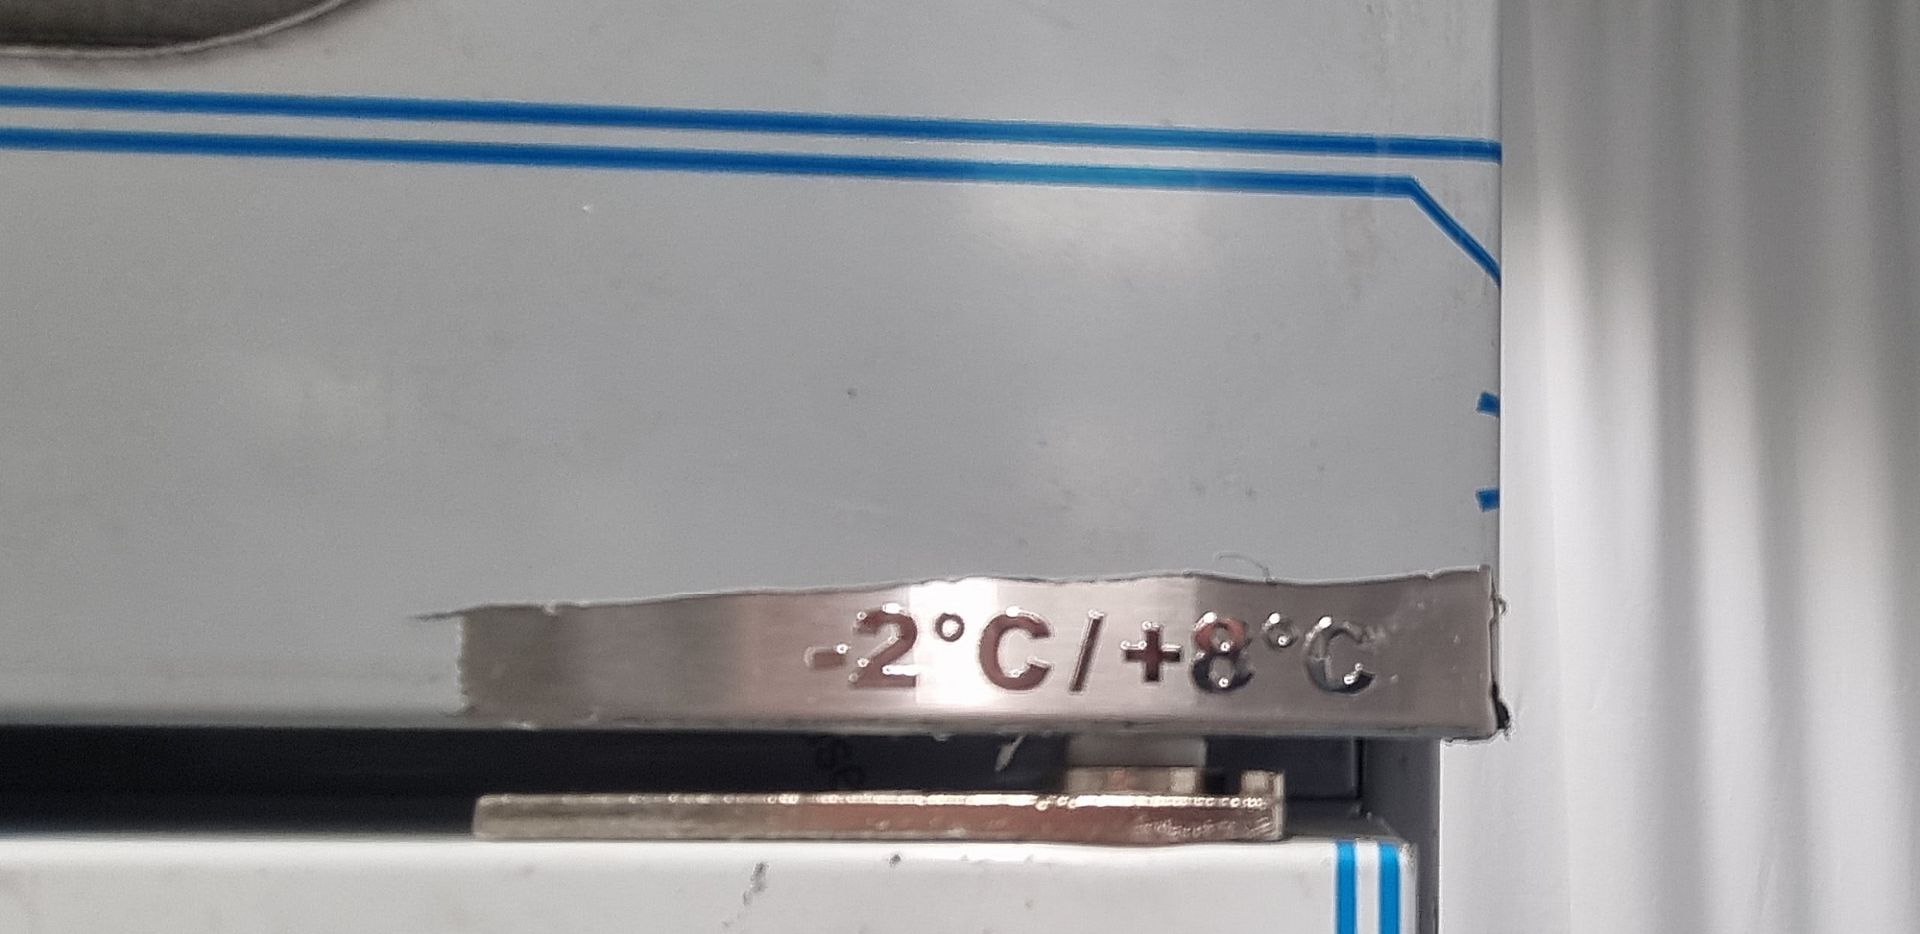 Iceinox VTS 1340 CR stainless steel upright, double door refrigerator - Image 5 of 11